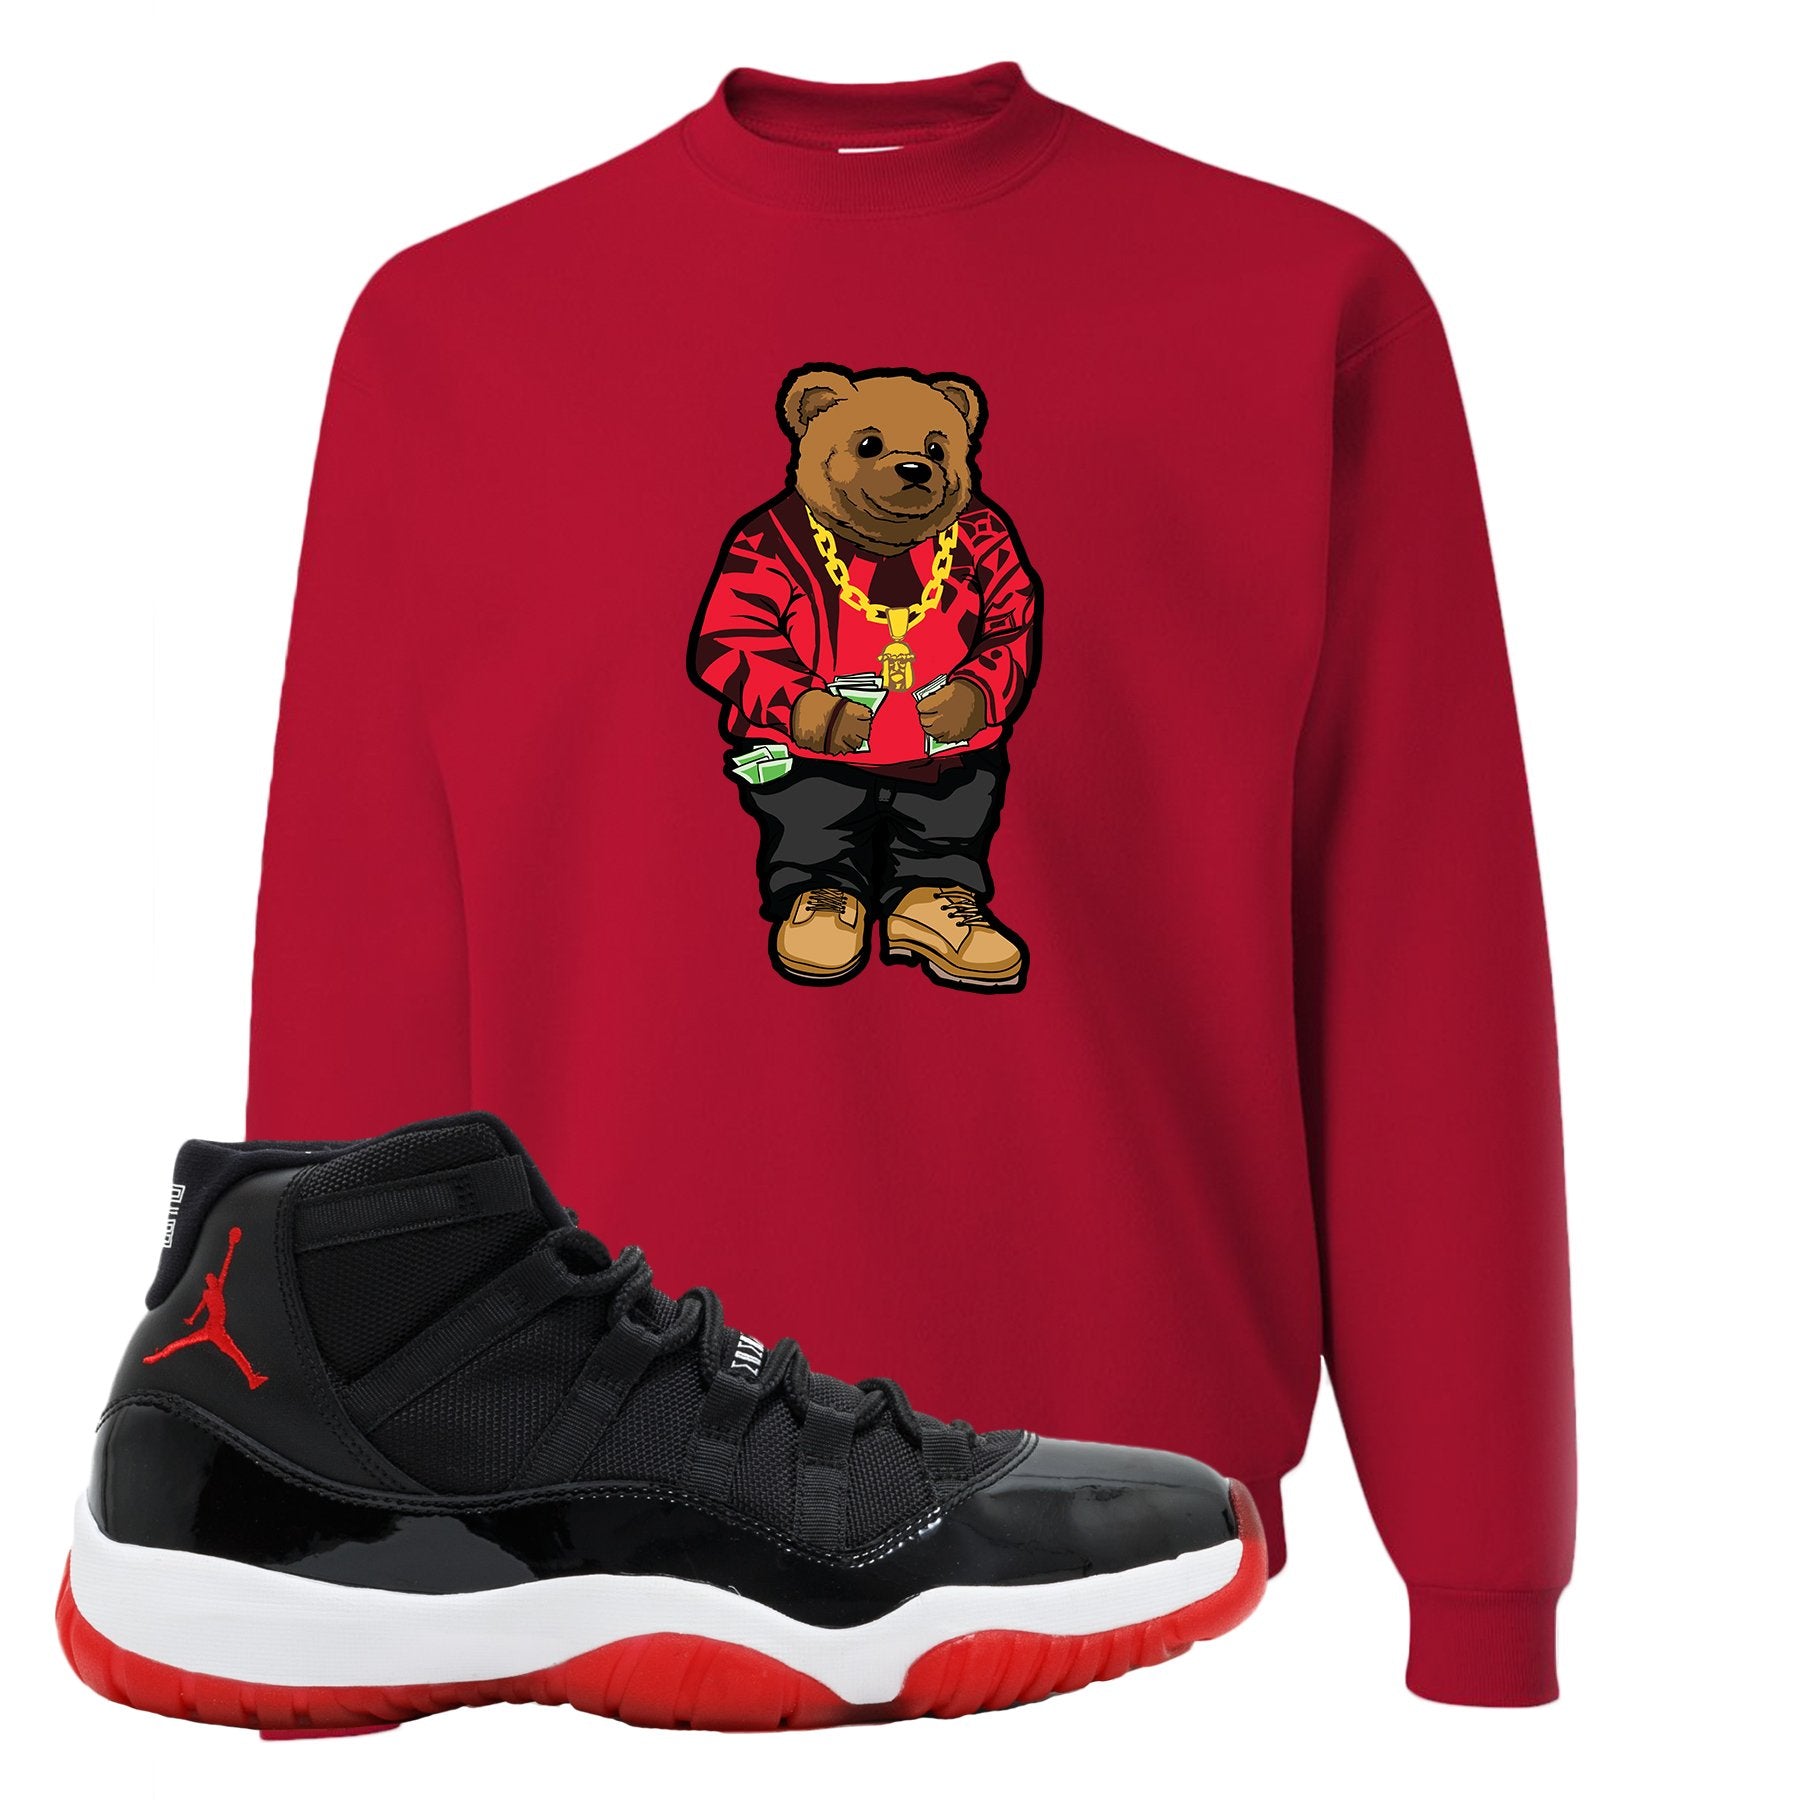 Jordan 11 Bred Sweater Bear Red Sneaker Hook Up Crewneck Sweatshirt